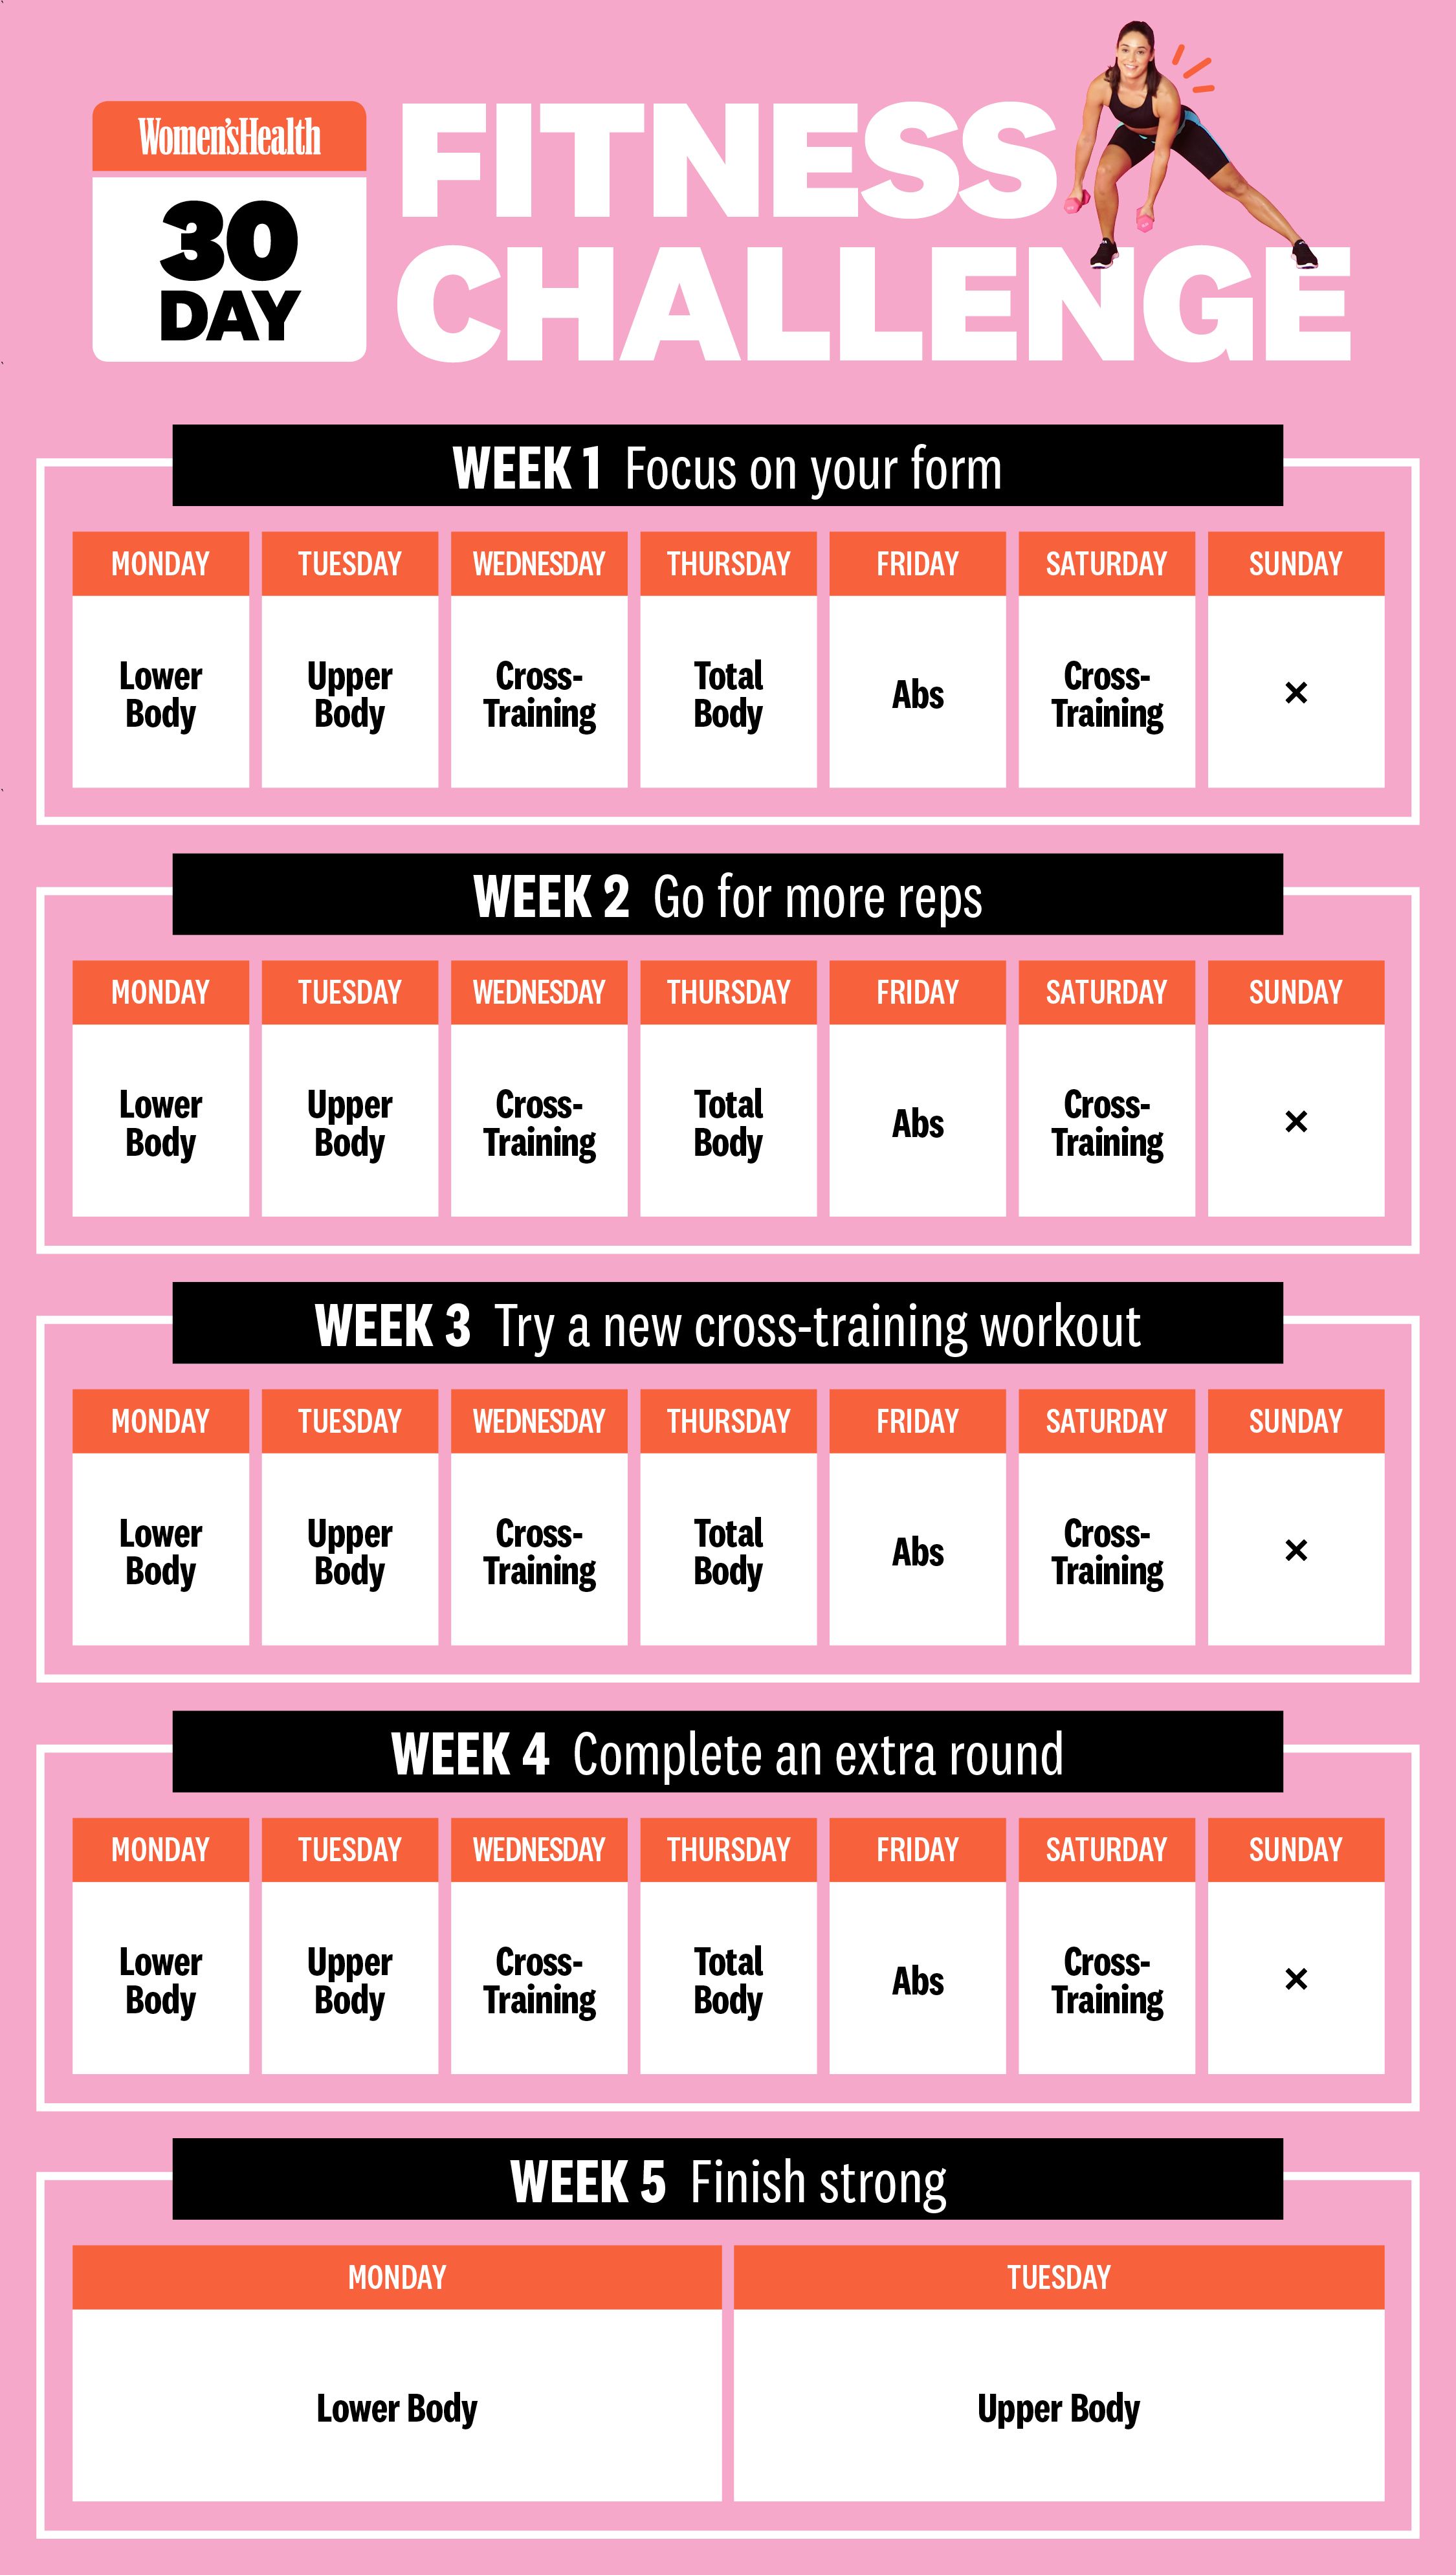 workout routine